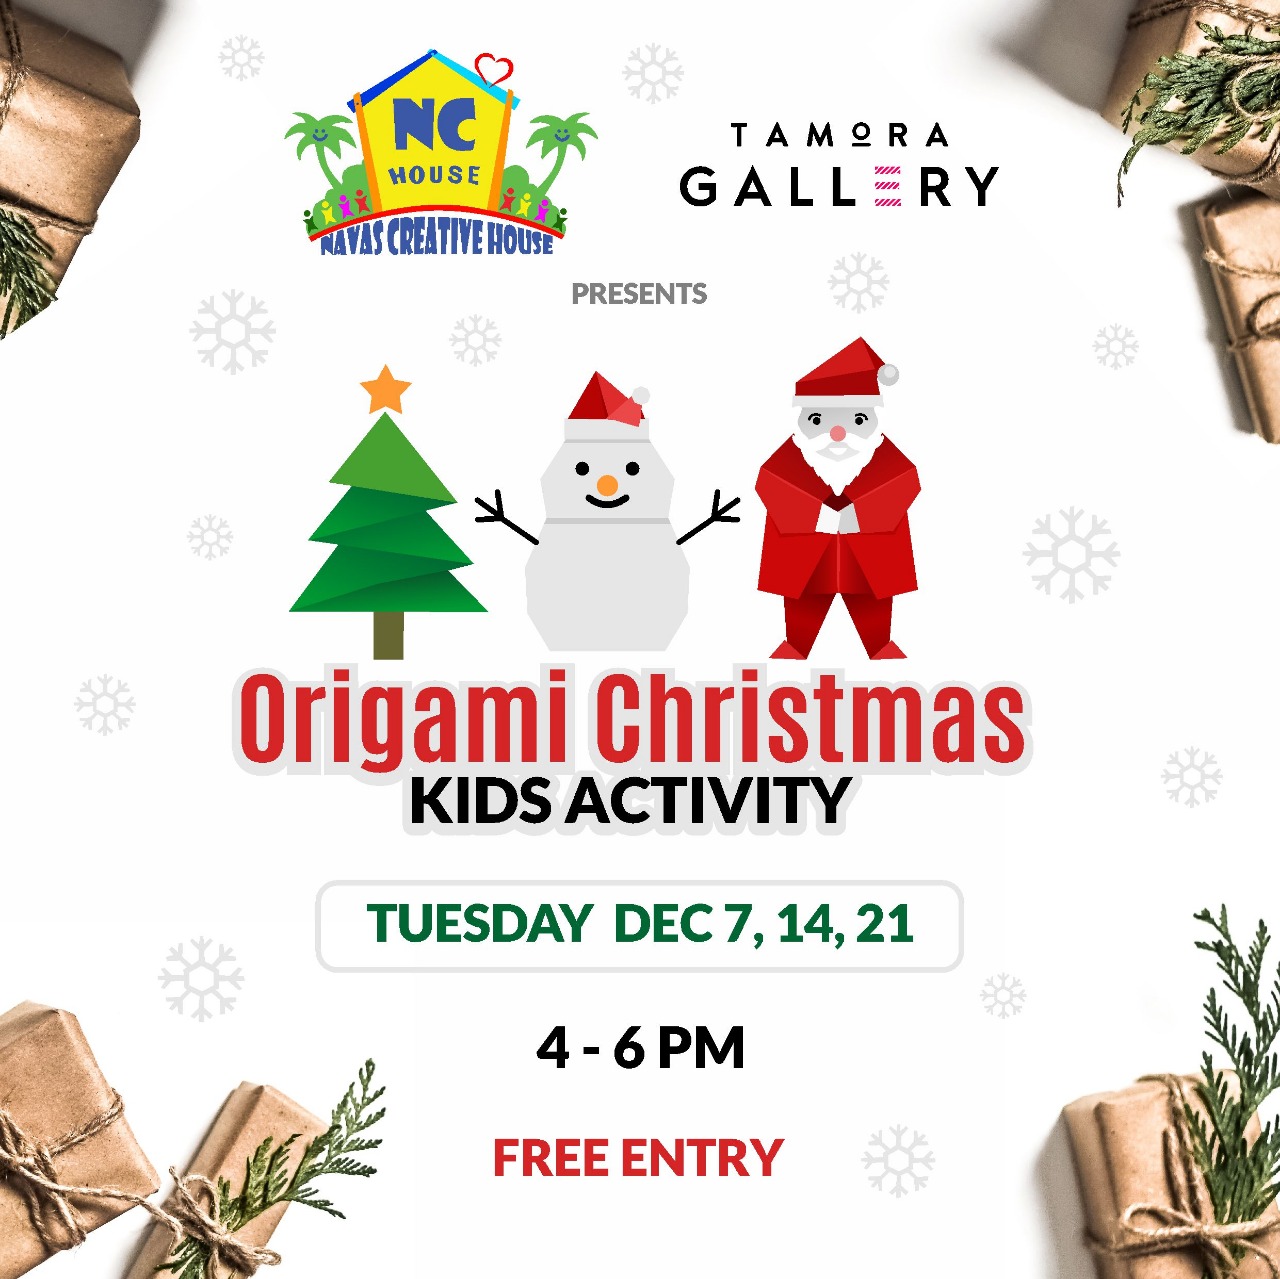 Tamora Gallery Origami Christmas Kids Activity